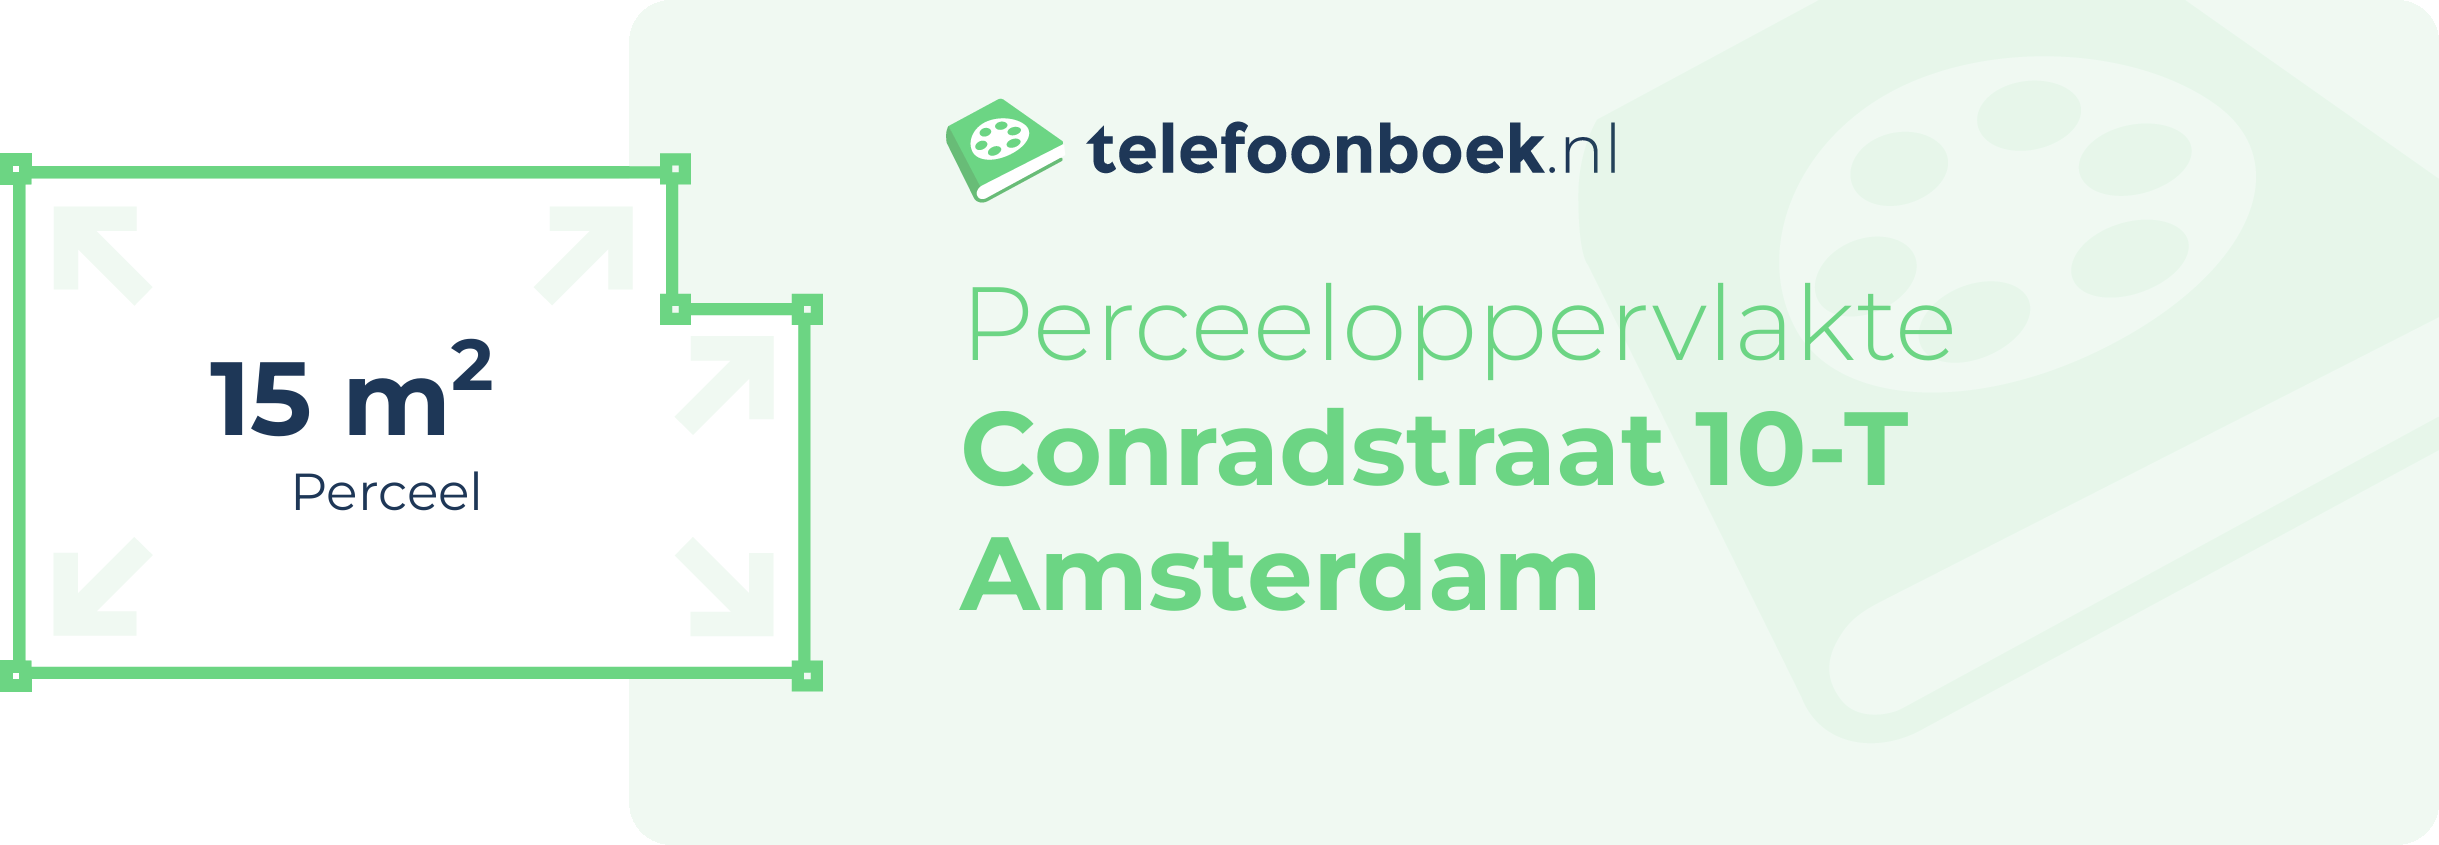 Perceeloppervlakte Conradstraat 10-T Amsterdam